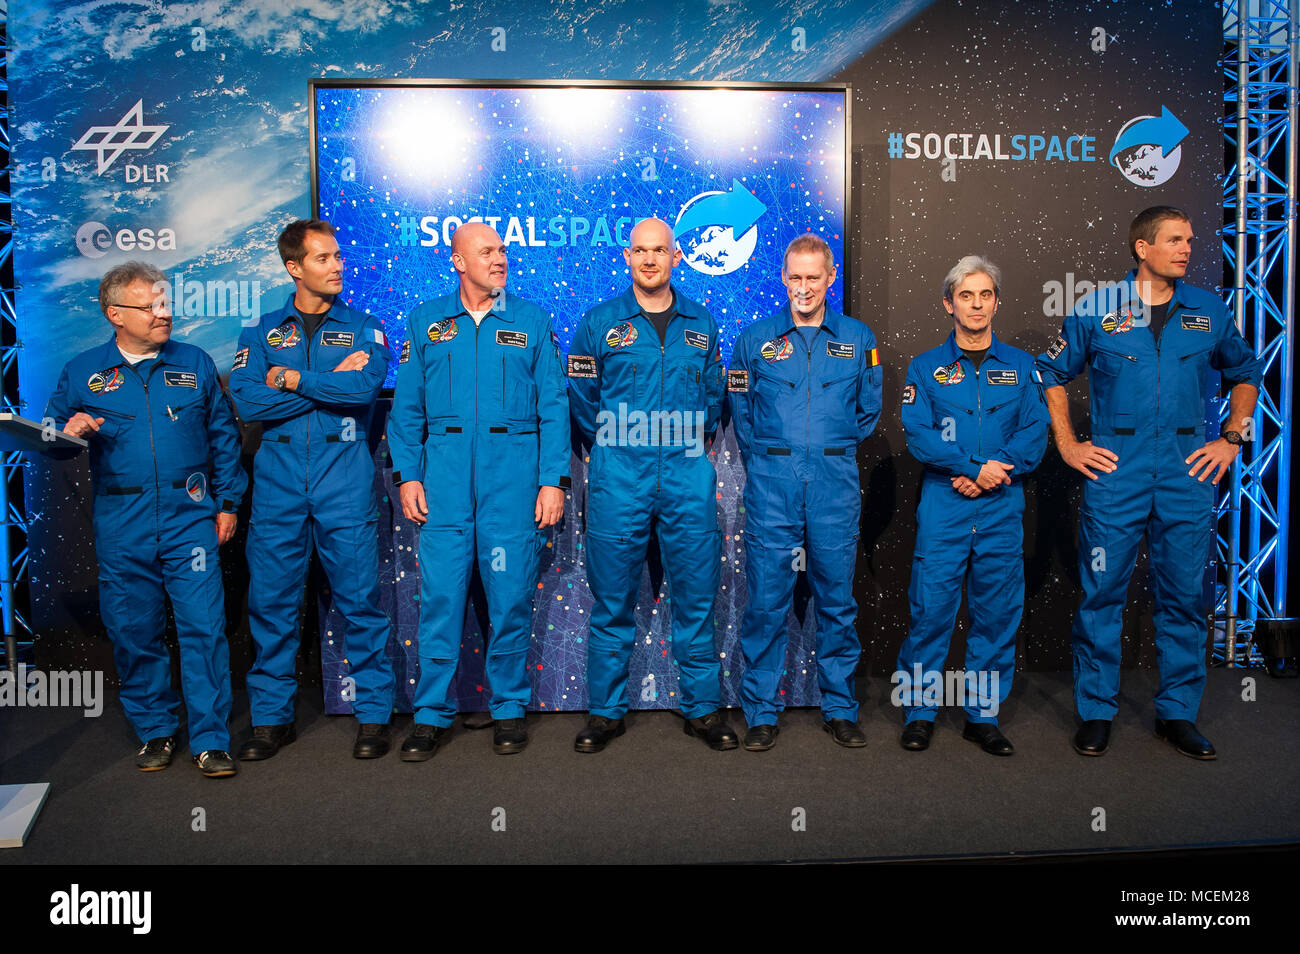 Un gruppo di astronauti ESA. l. r.: Reinhold Ewald, Thomas Pesquet, André Kuipers, Alexander Gerst, Frank De Winne, Léopold Eyharts, Andreas Mogensen Foto Stock